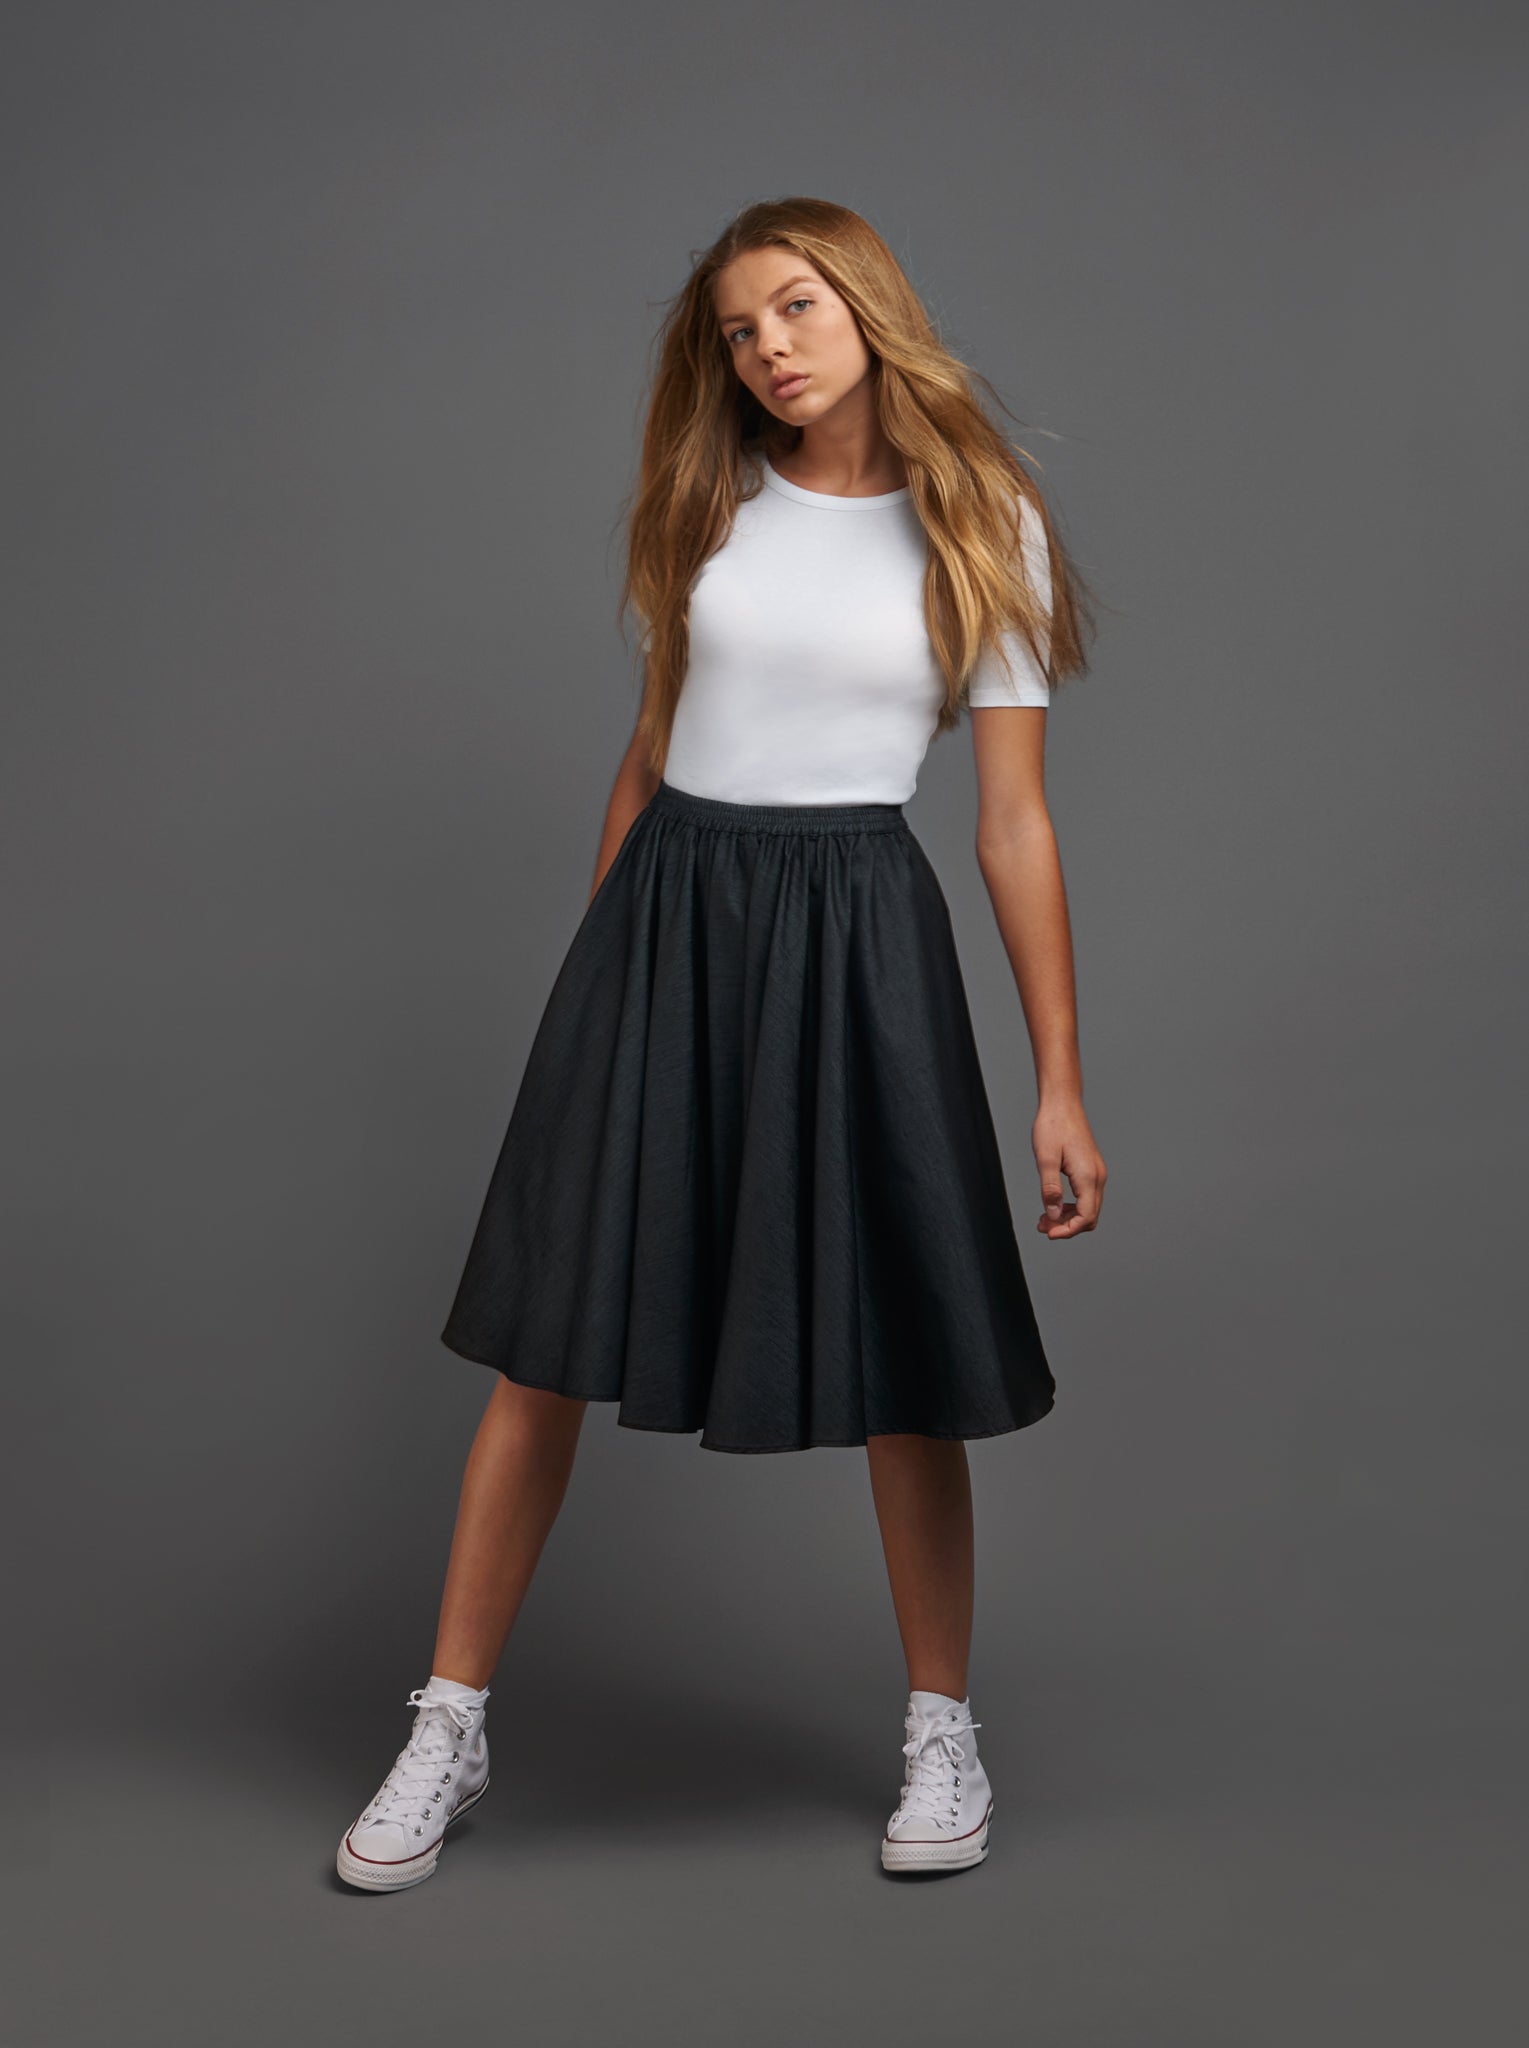 Black Circle Skirt #2150 FINAL SALE